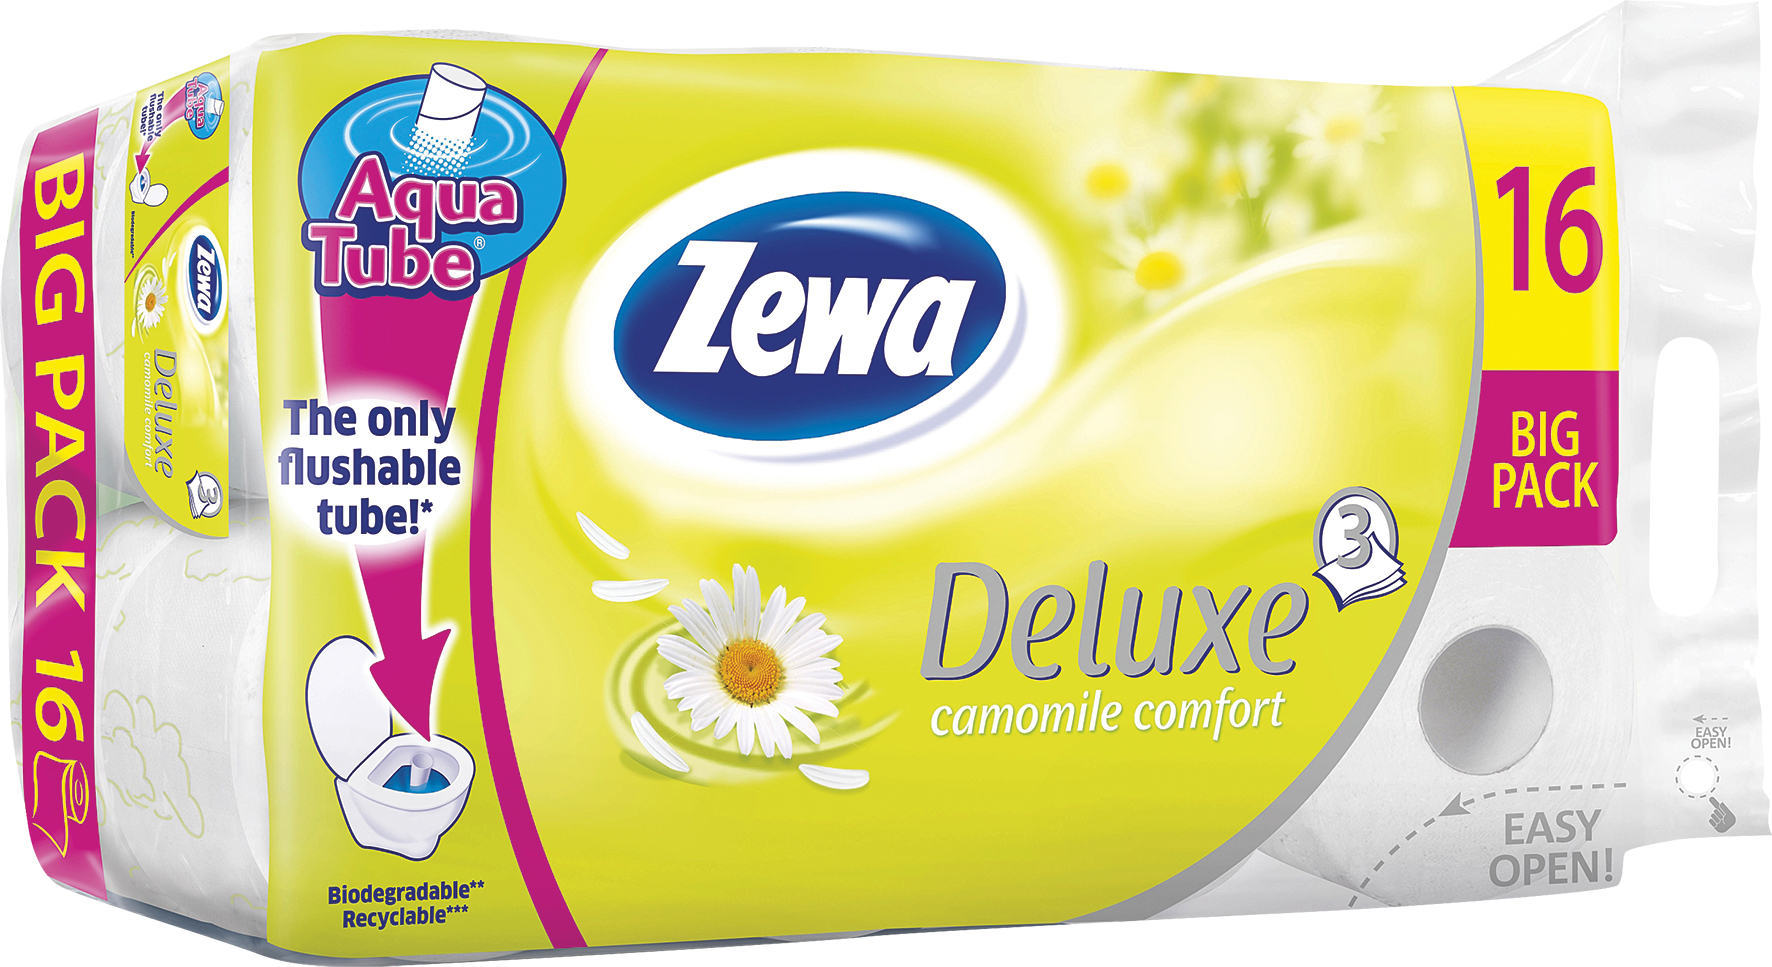 Бумажные полотенца Zewa Deluxe. Zewa 16 рулонов. Zewa Deluxe Camomile Comfort. Zewa "Deluxe Camomile" 16 SHT.